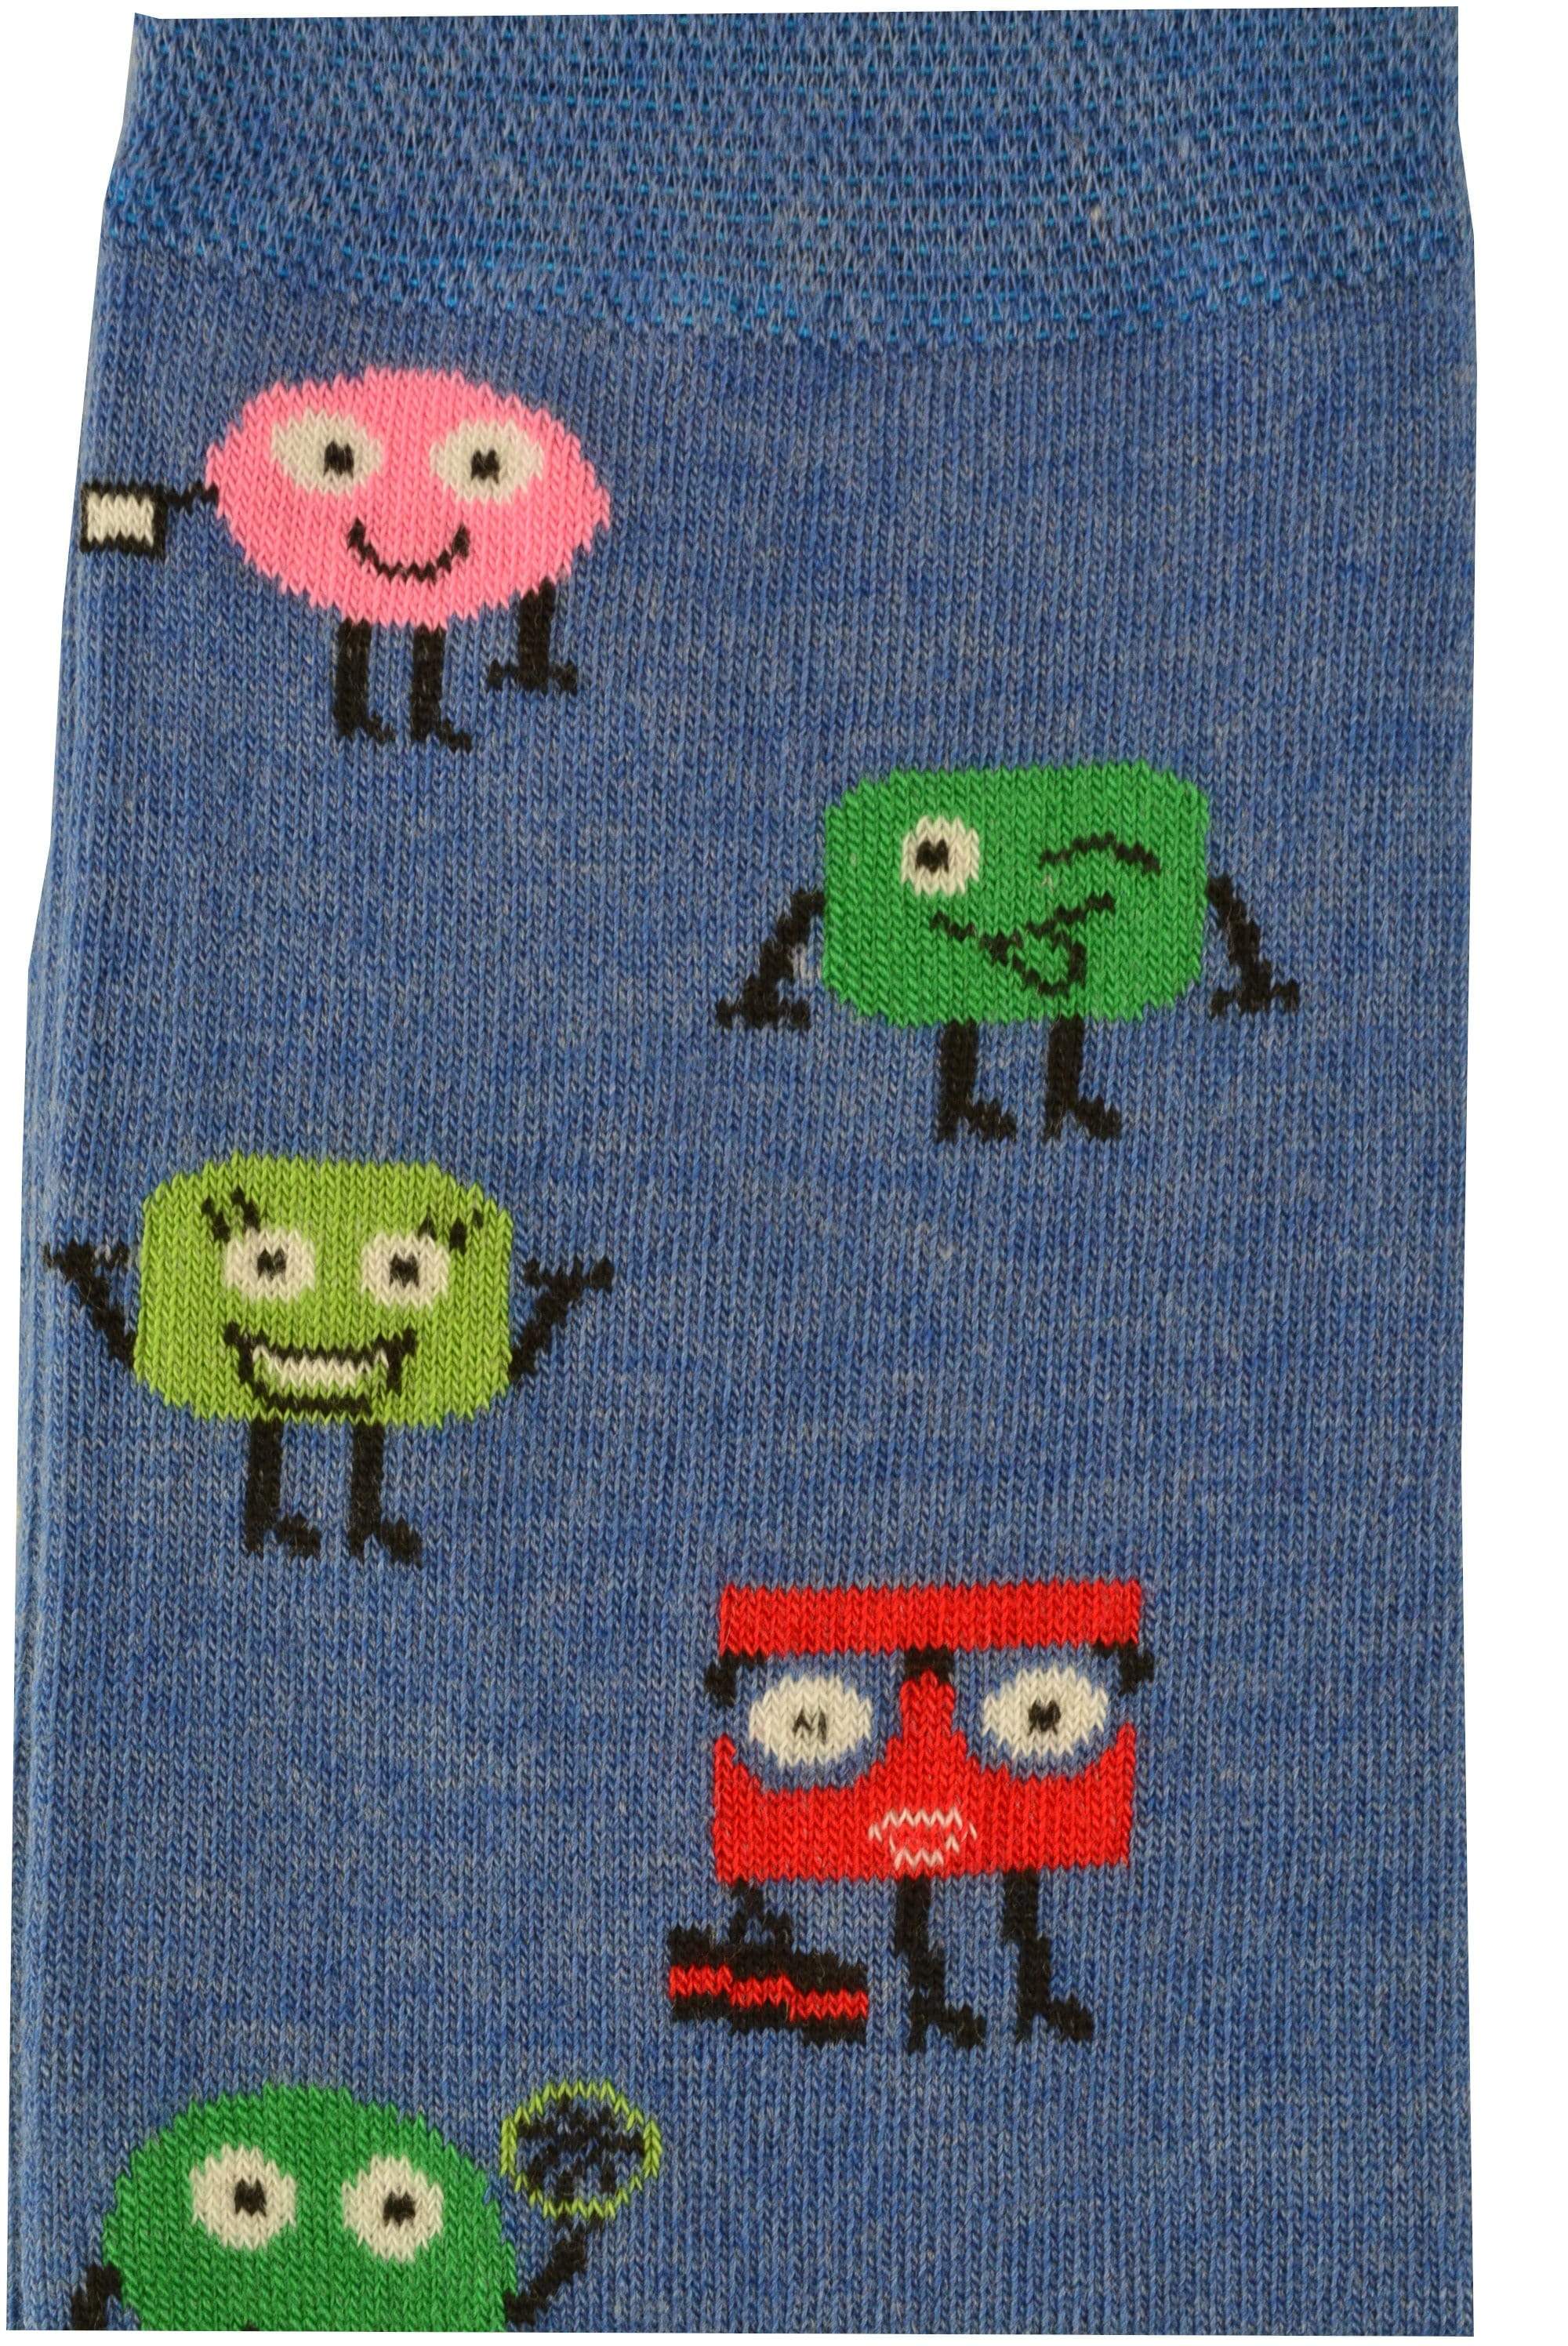 Game Design Colorful Smooth Toe Men Crew Socks M7752